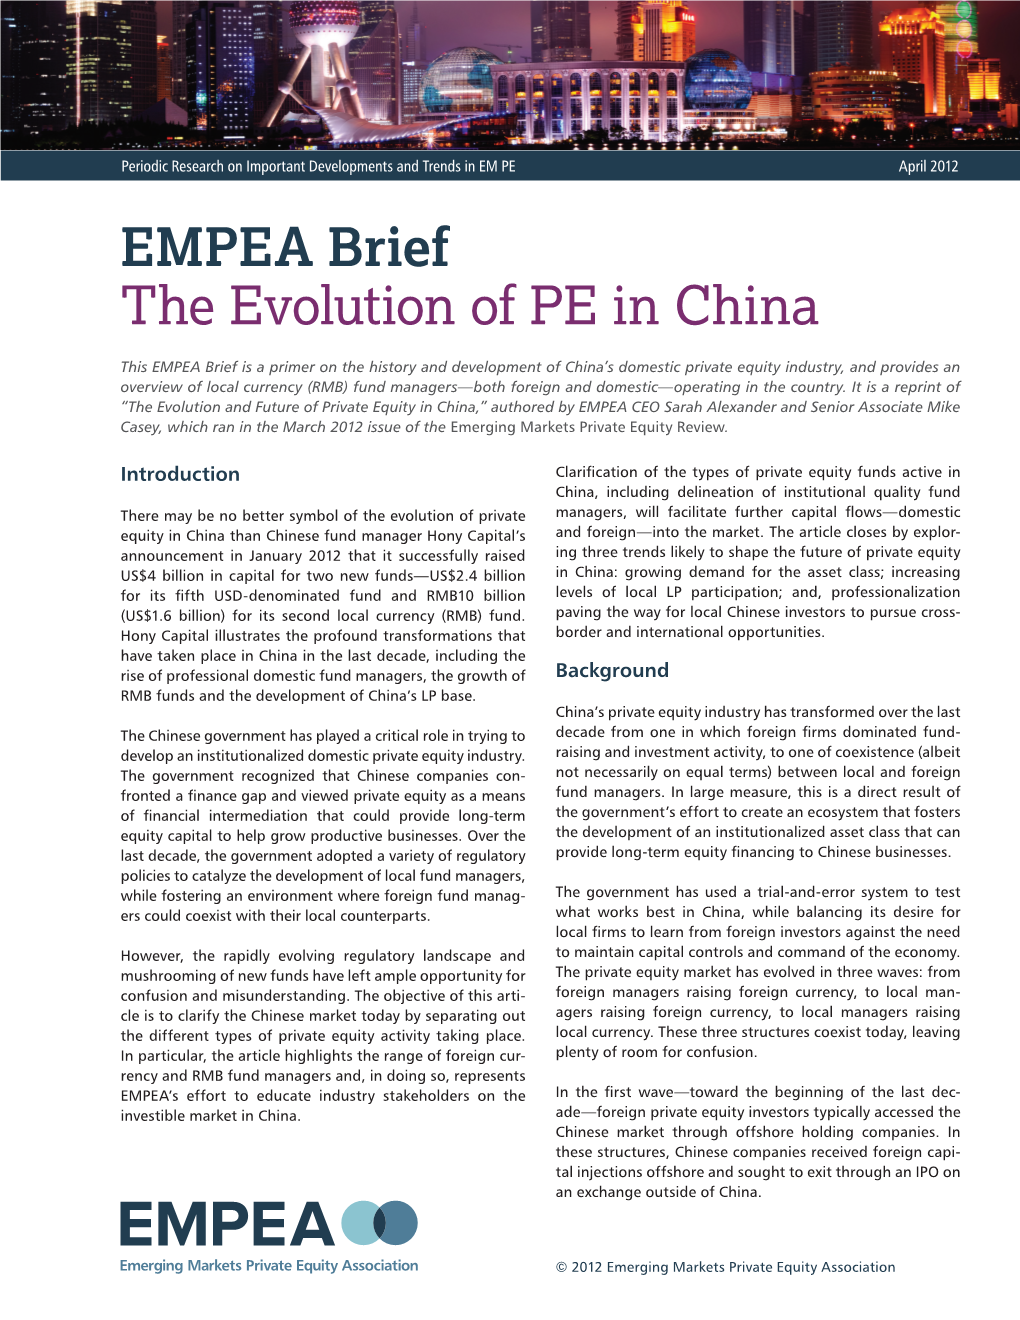 EMPEA Brief the Evolution of PE in China